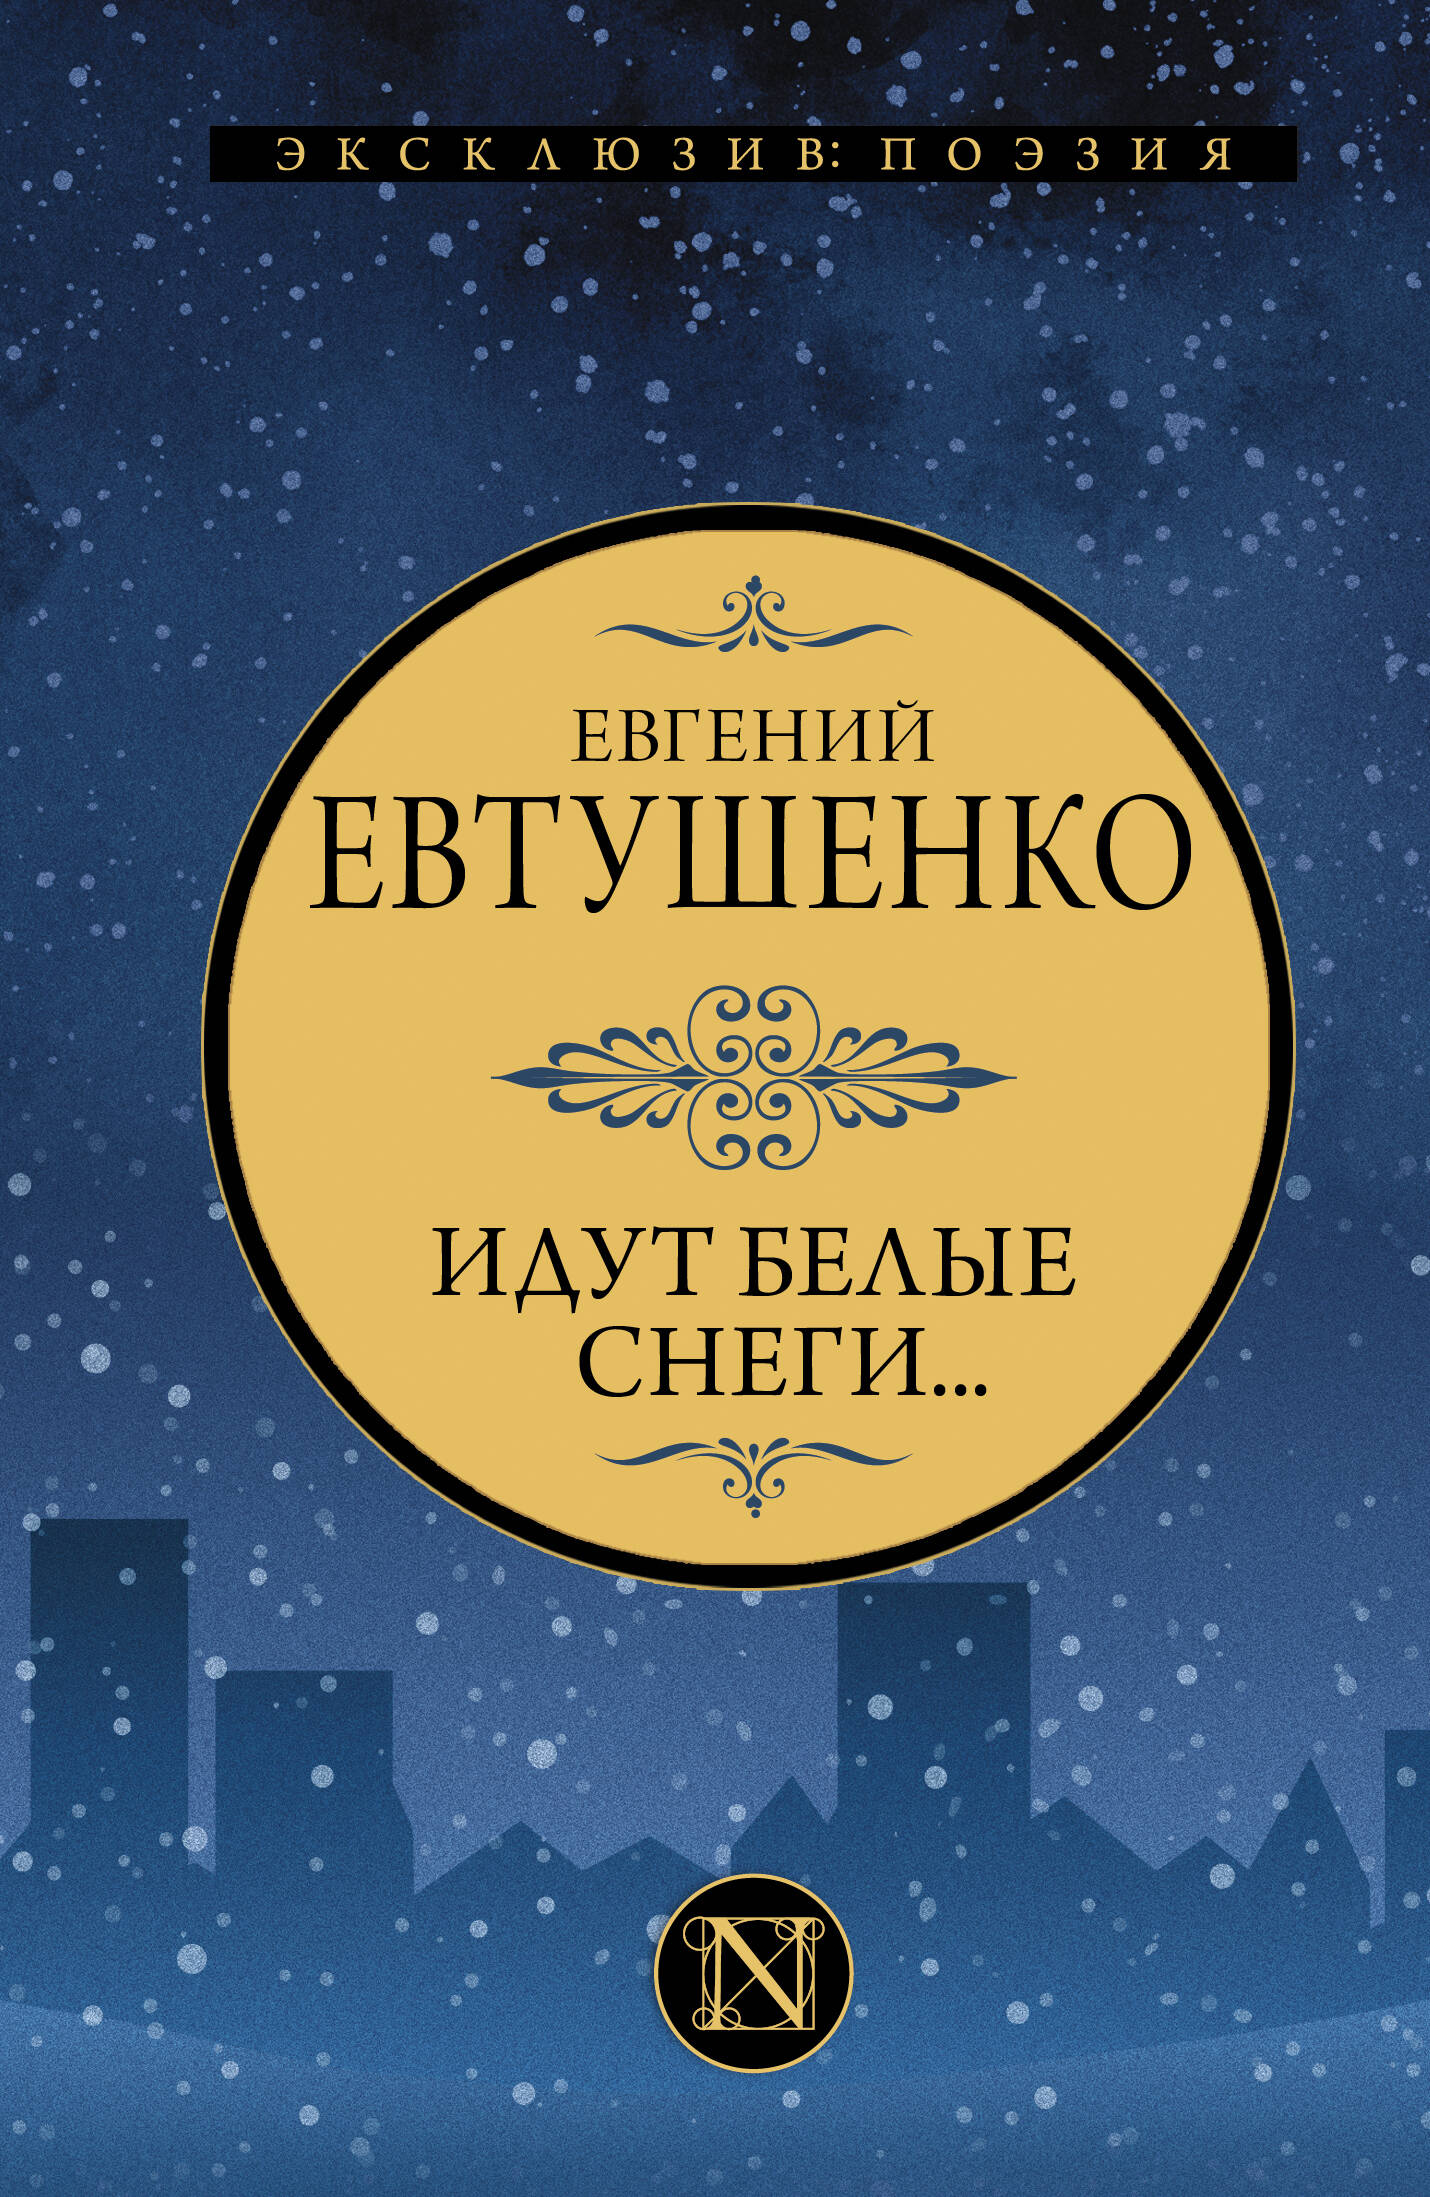 Евтушенко Евгений Александрович - Идут белые снеги...: сборник стихотворений